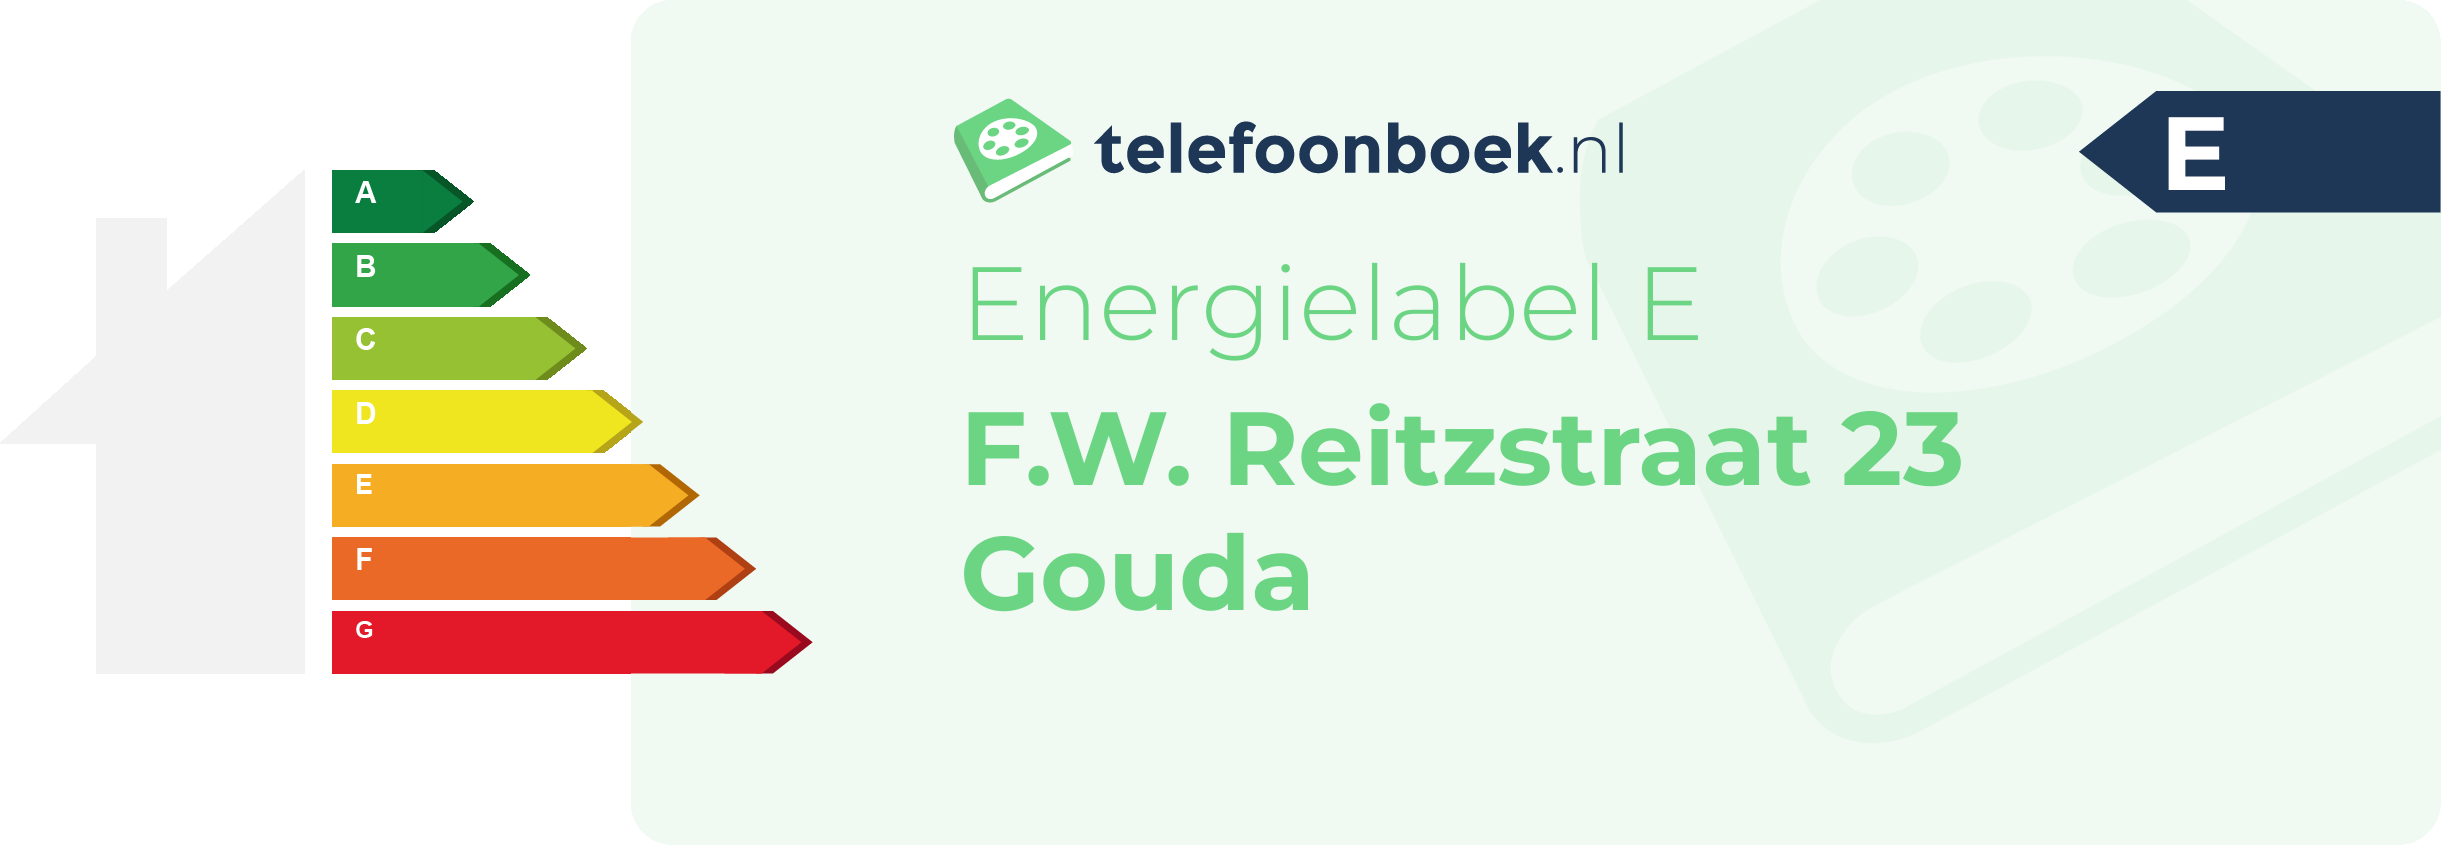 Energielabel F.W. Reitzstraat 23 Gouda